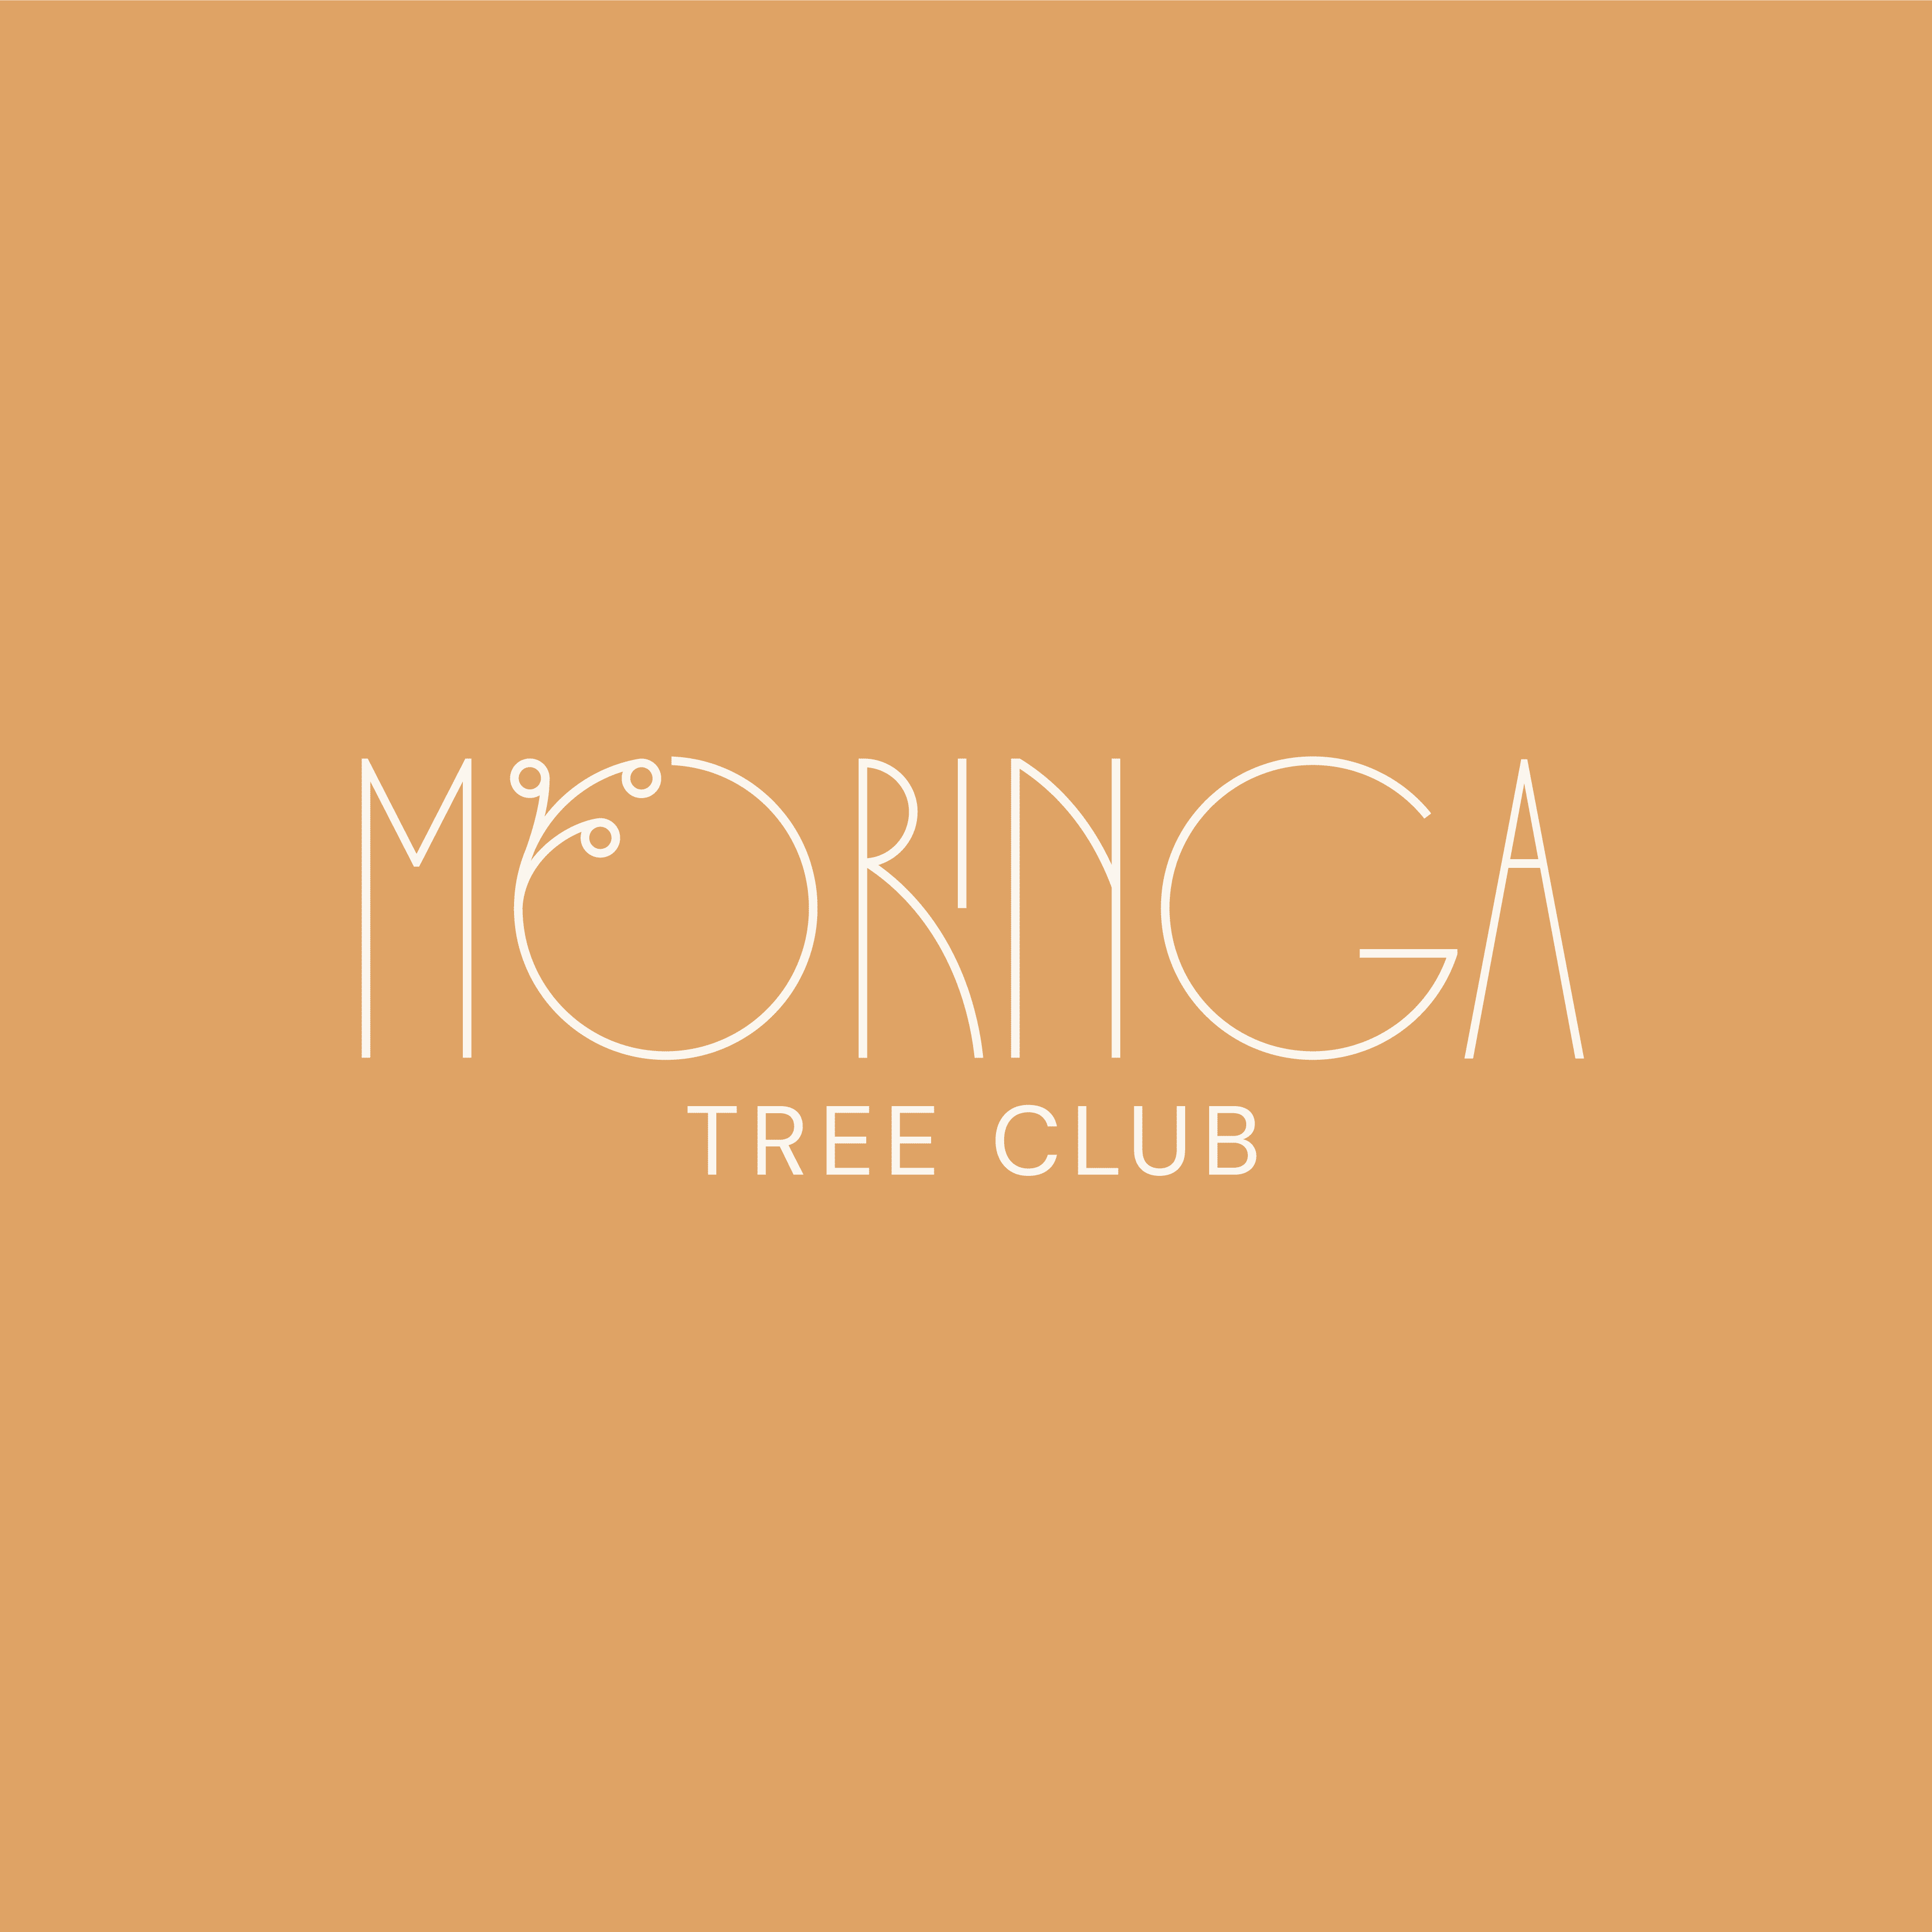 Moringa Tree Club